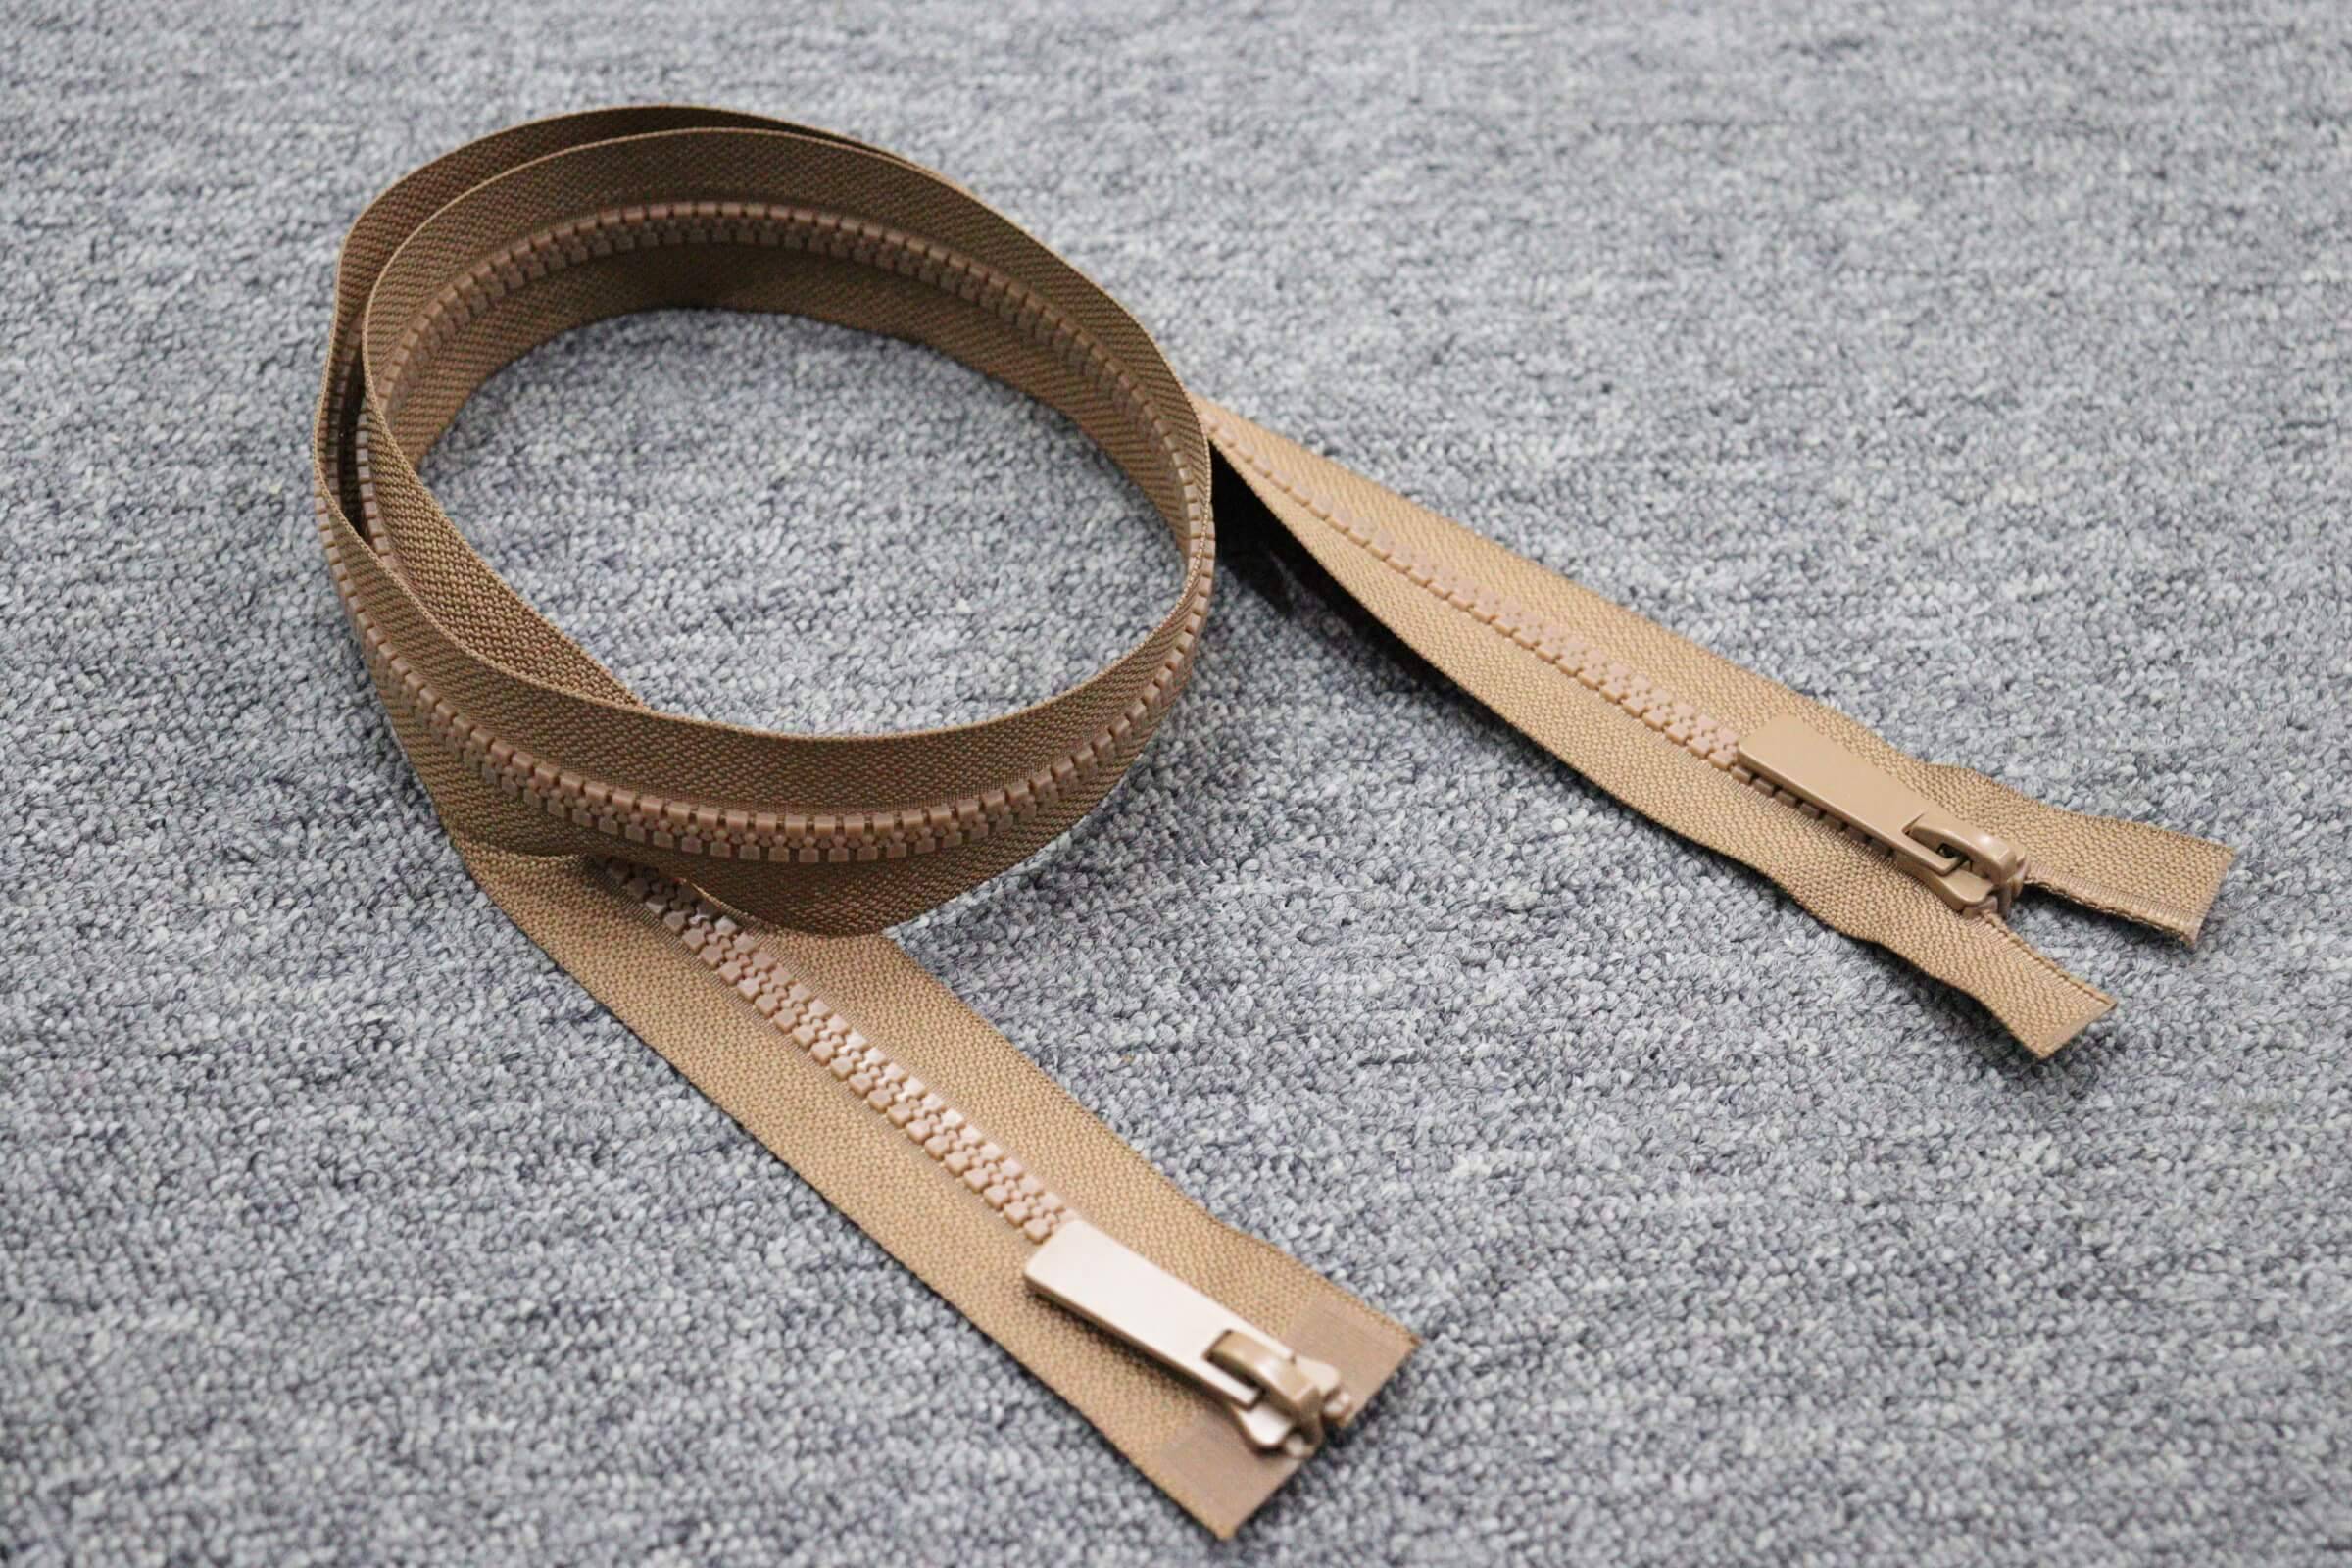 ZIPHOO #8 Plastic Two-Way Separating Zipper